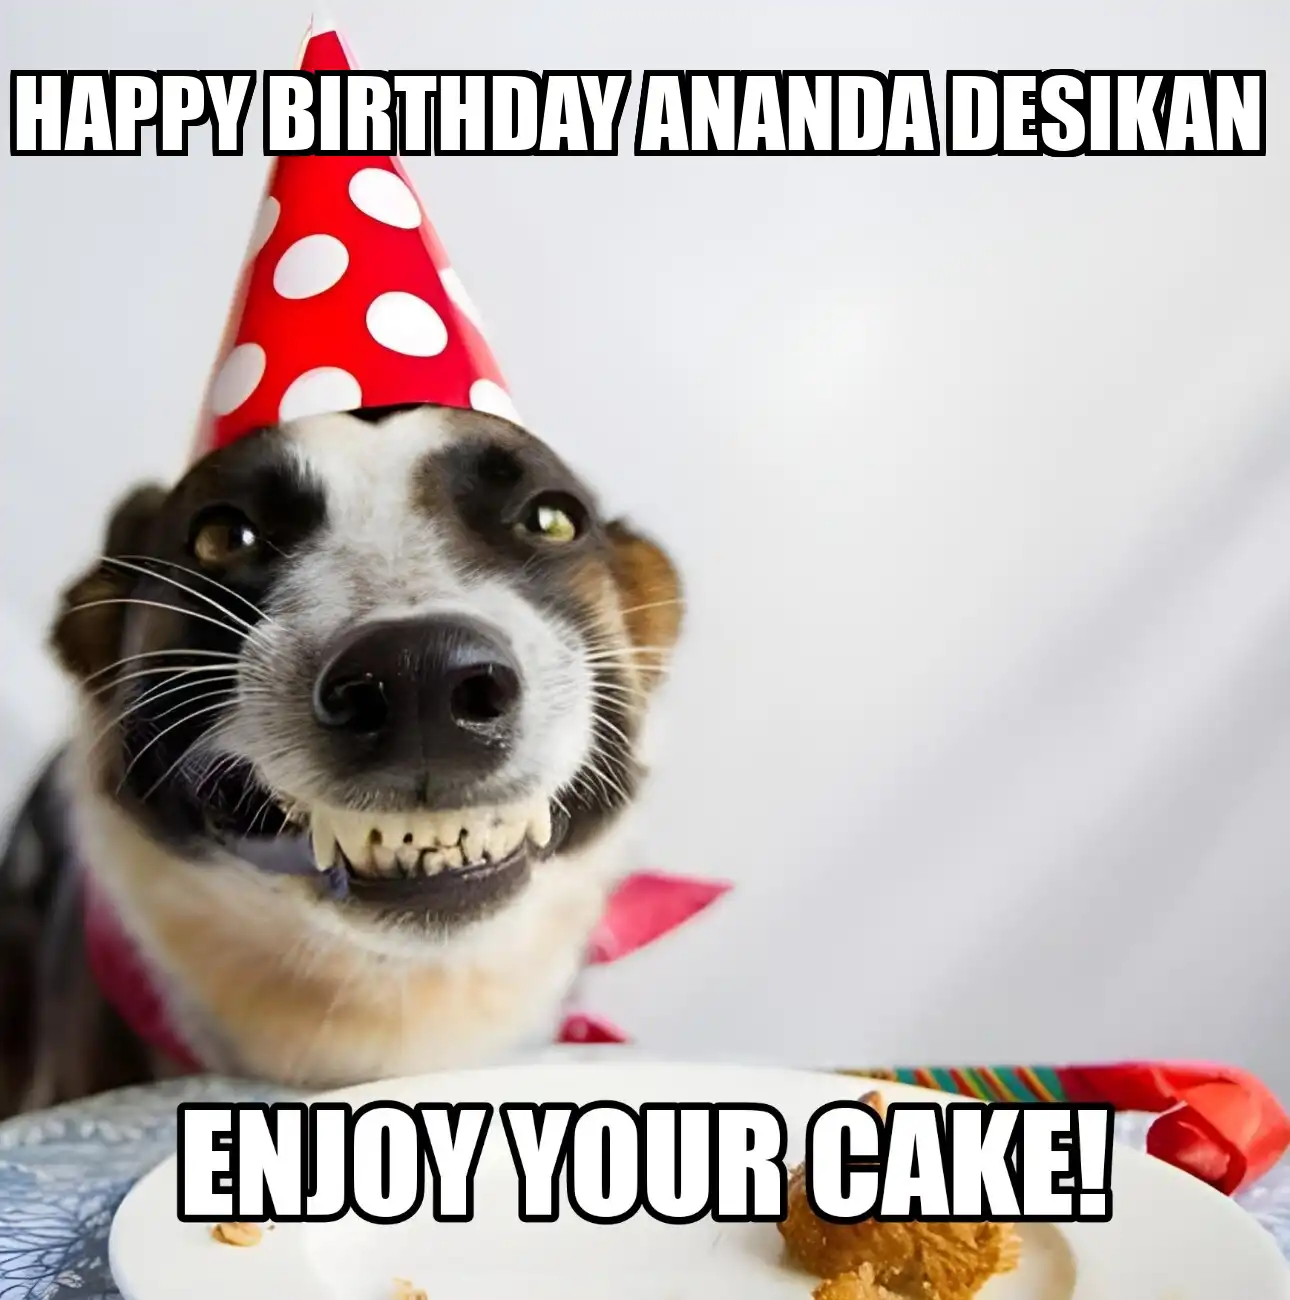 Happy Birthday Ananda desikan Enjoy Your Cake Dog Meme